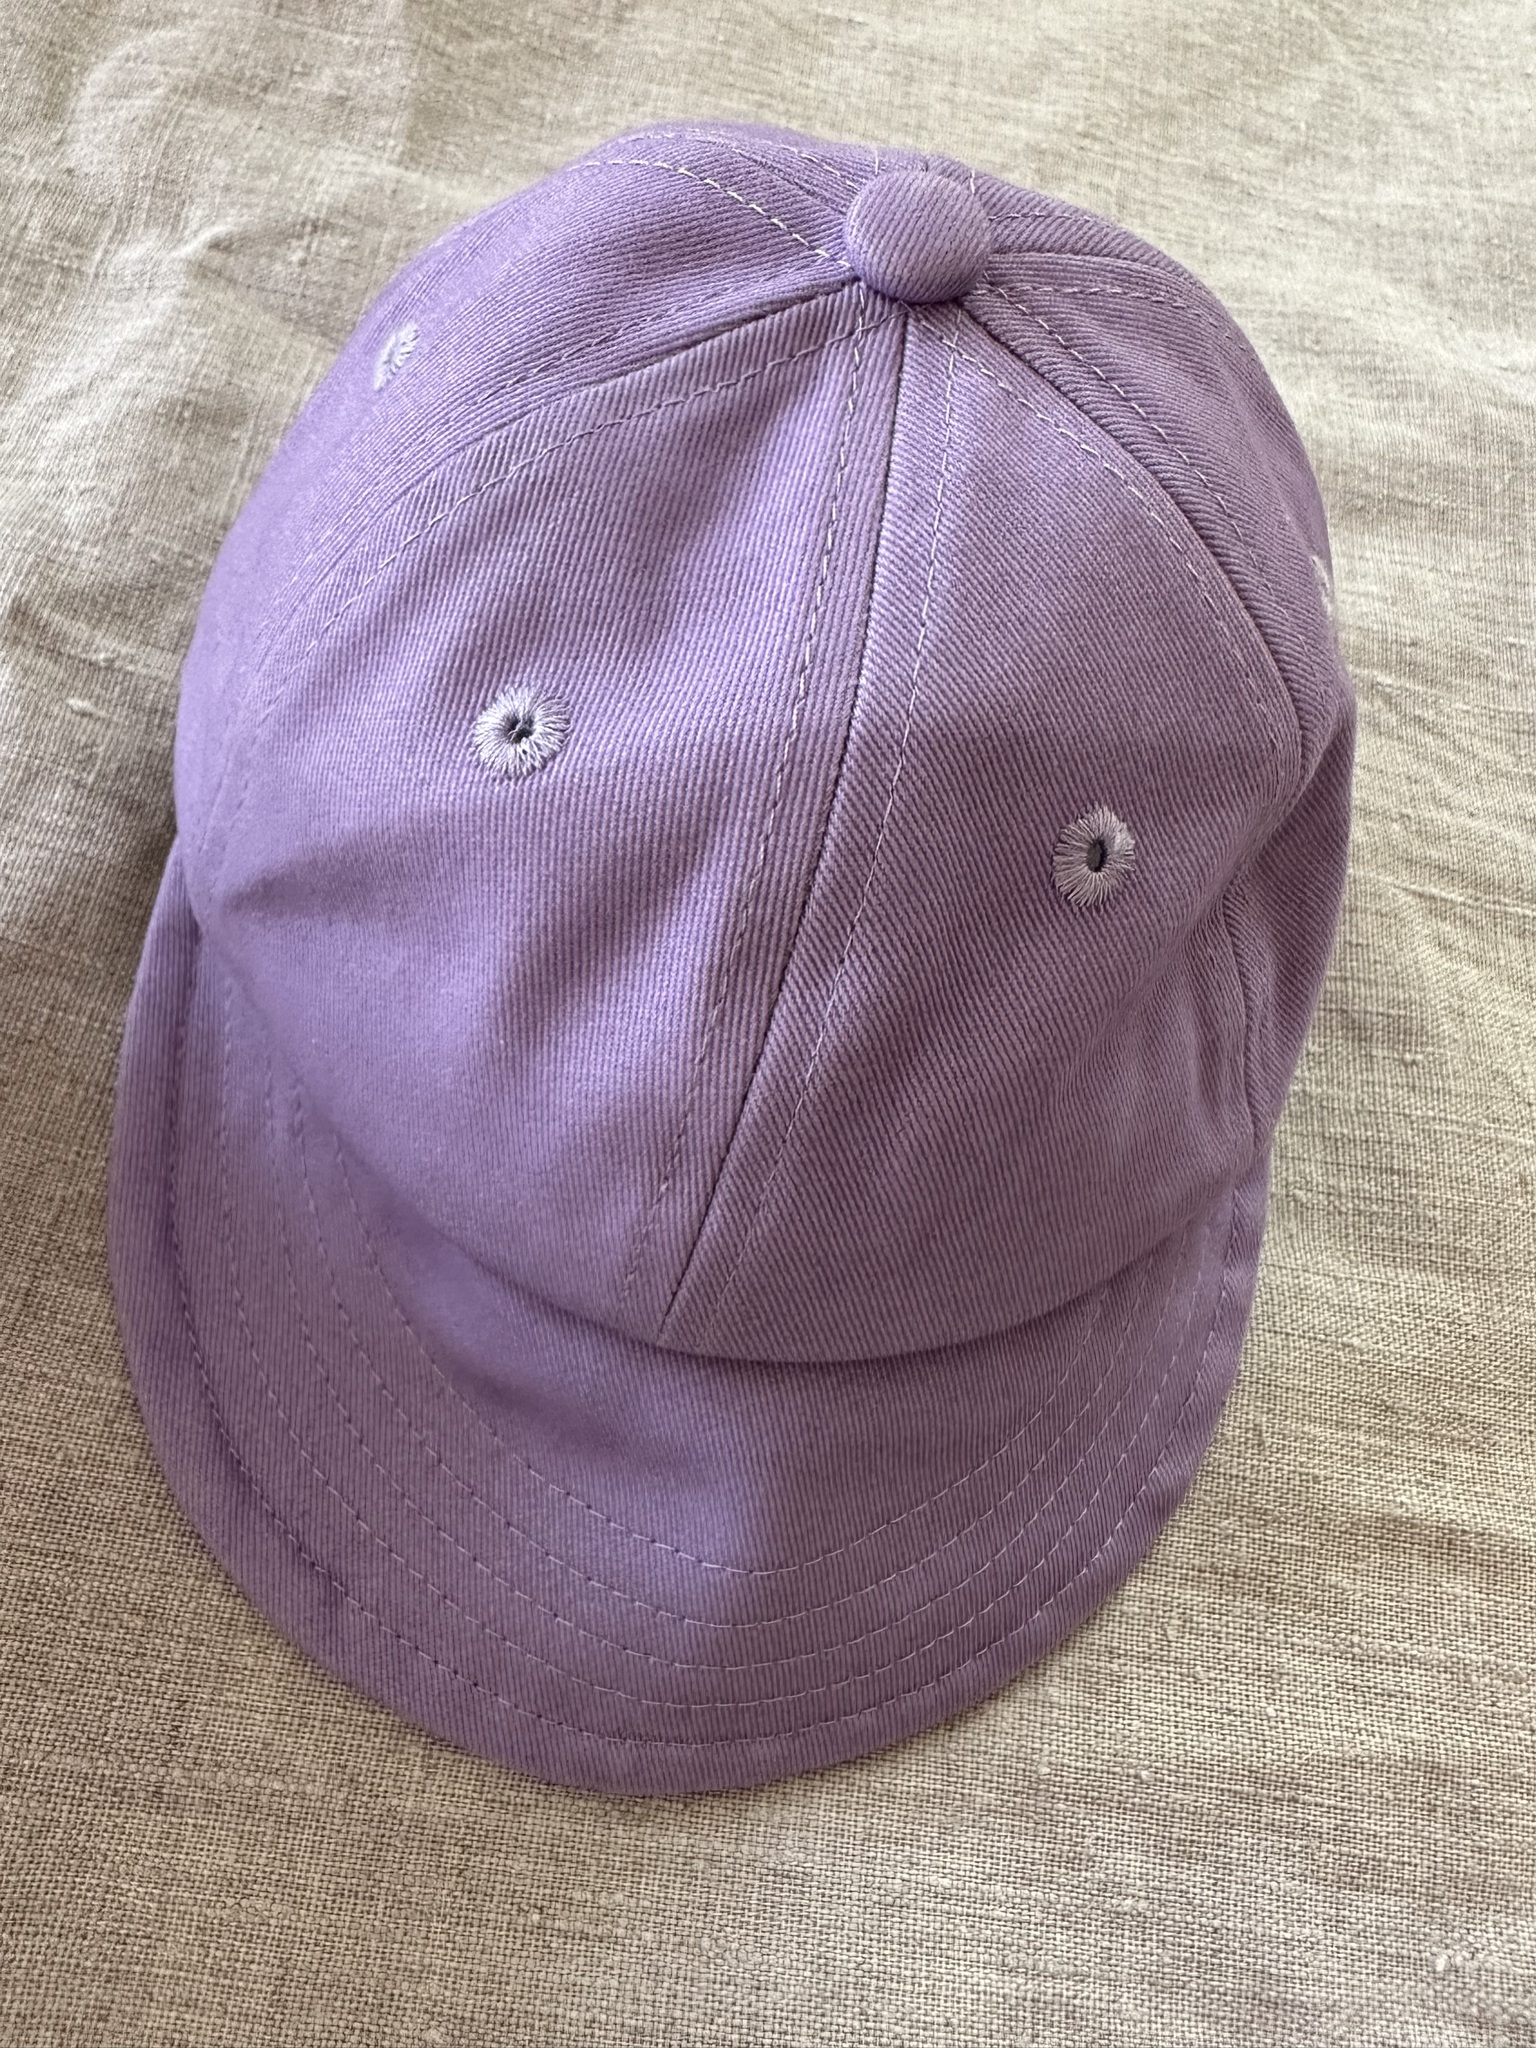 Keps - purple